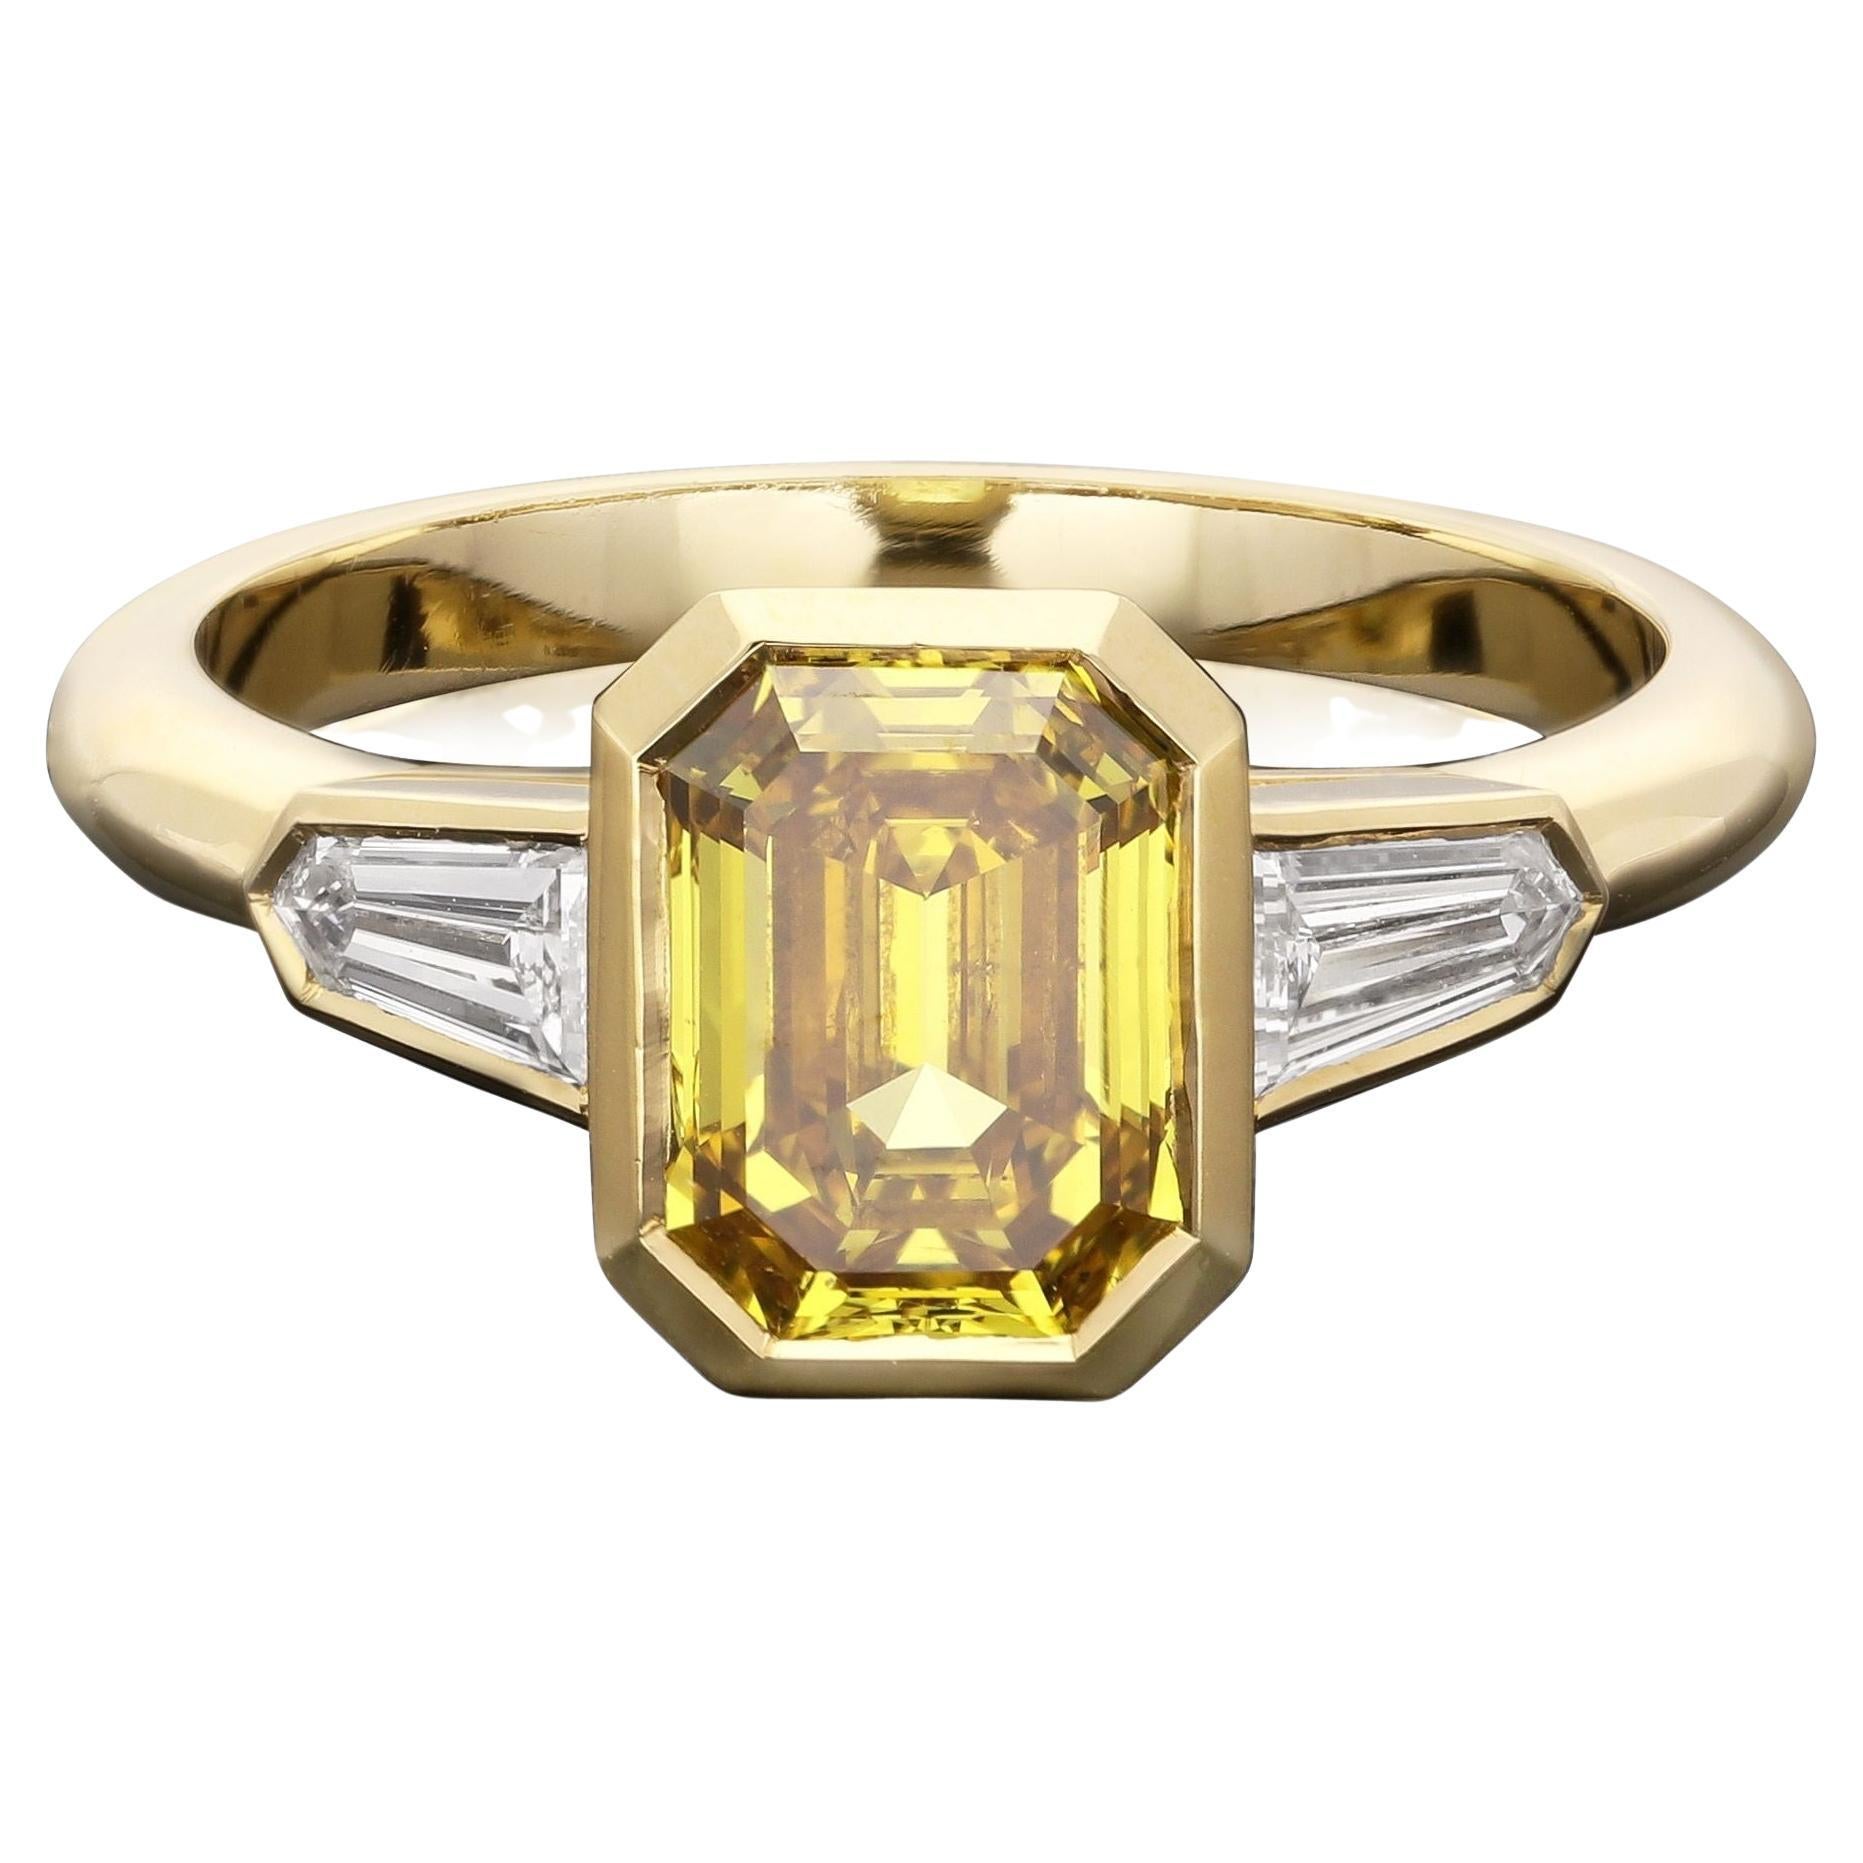 Hancocks 1,52ct Fancy Deep Yellow Diamond Ring mit weißen Diamanten Schultern